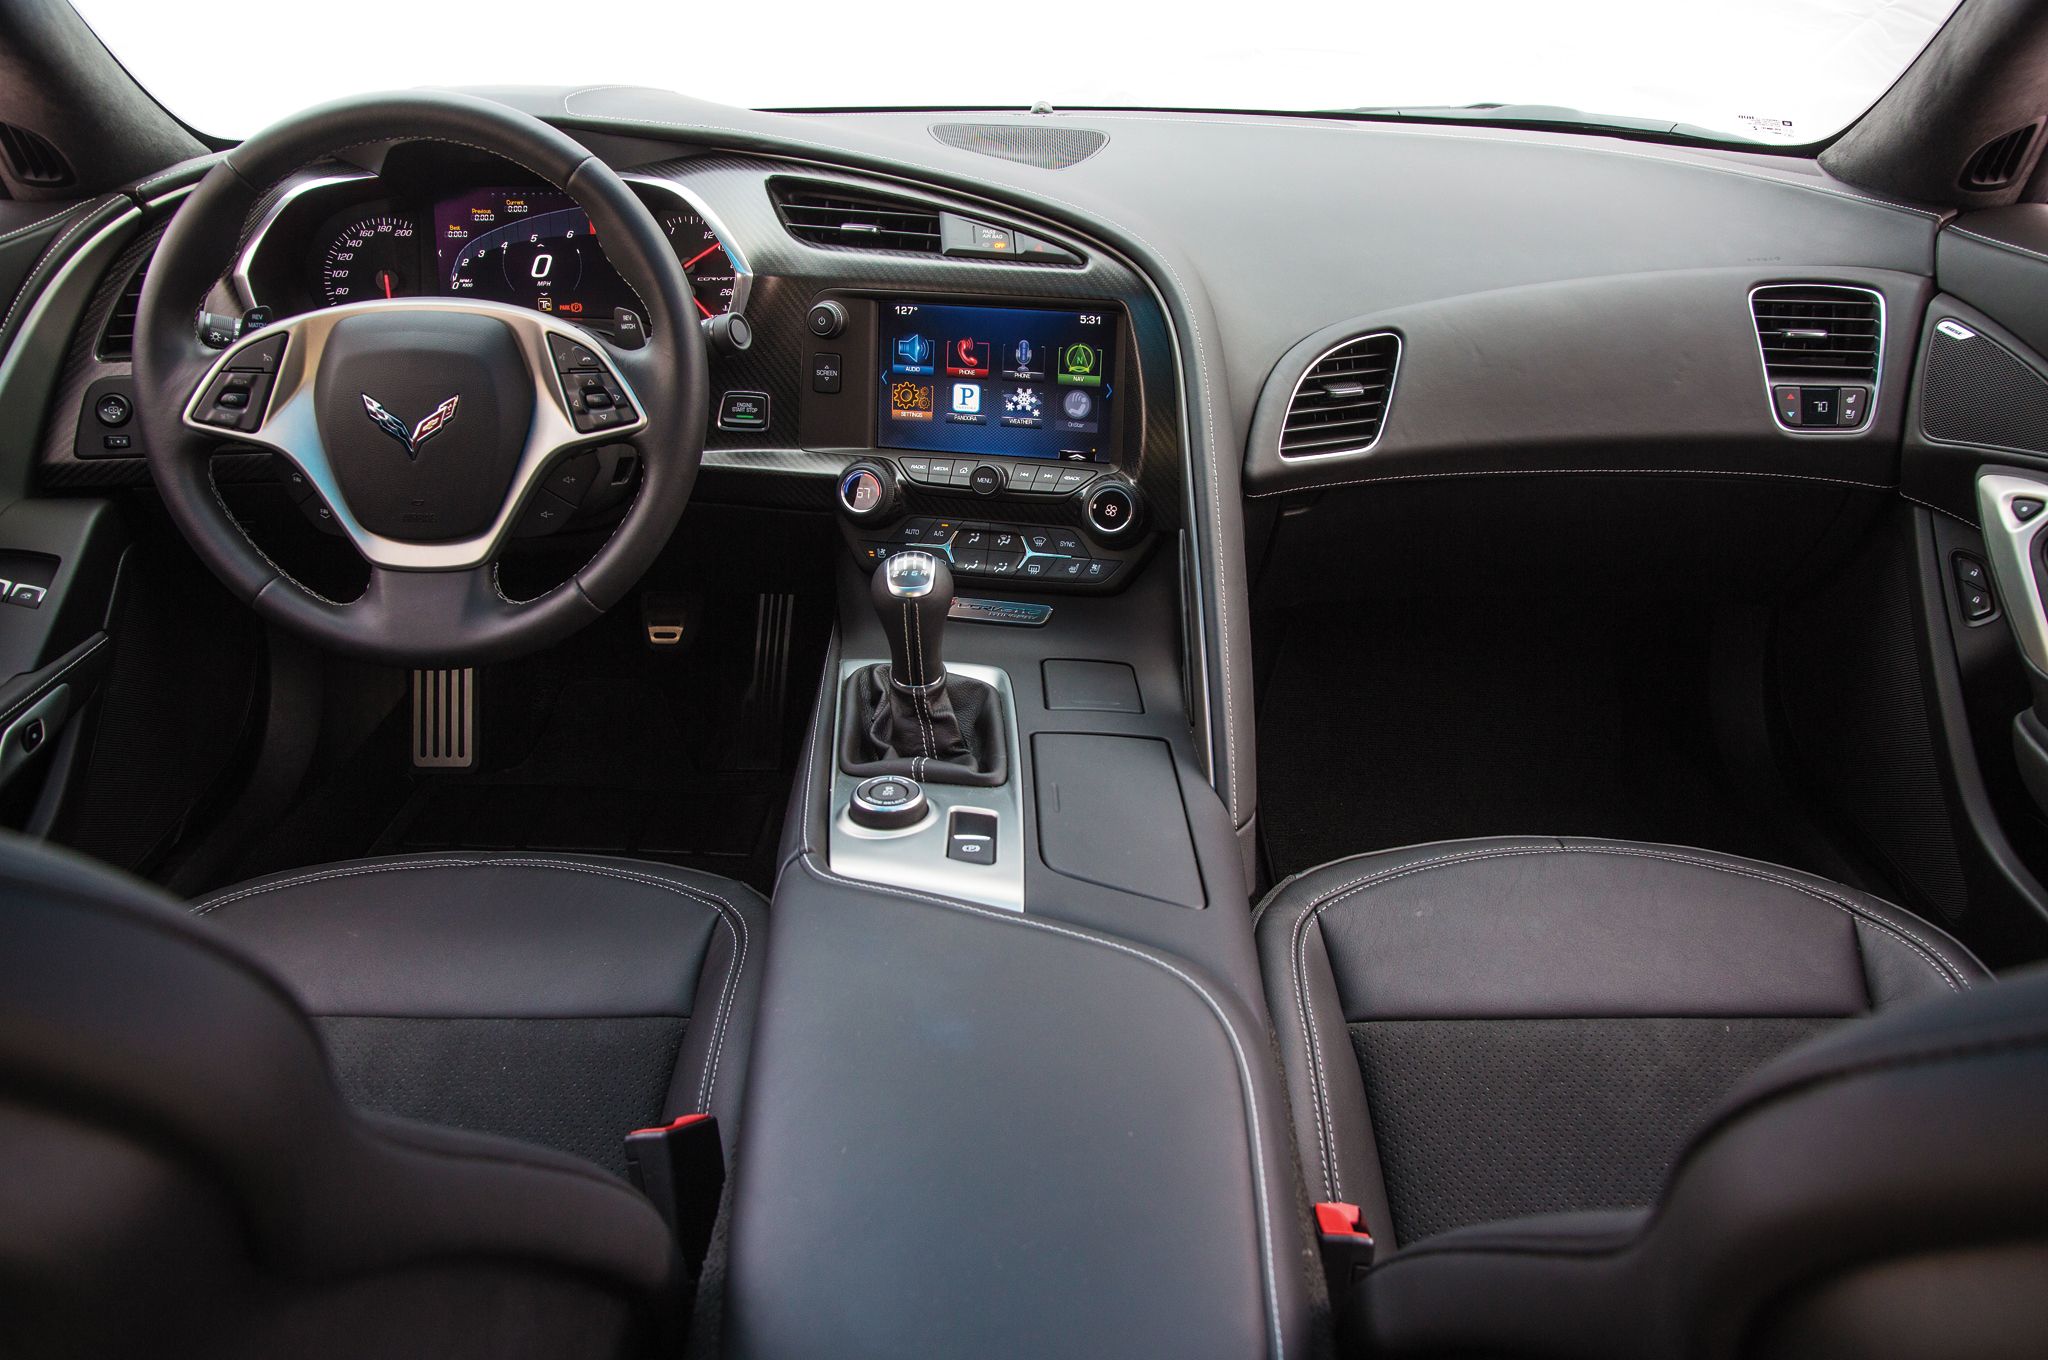 2014 Chevrolet Corvette Stingray Z51 Dashboard And Cockpit (View 5 of 7)